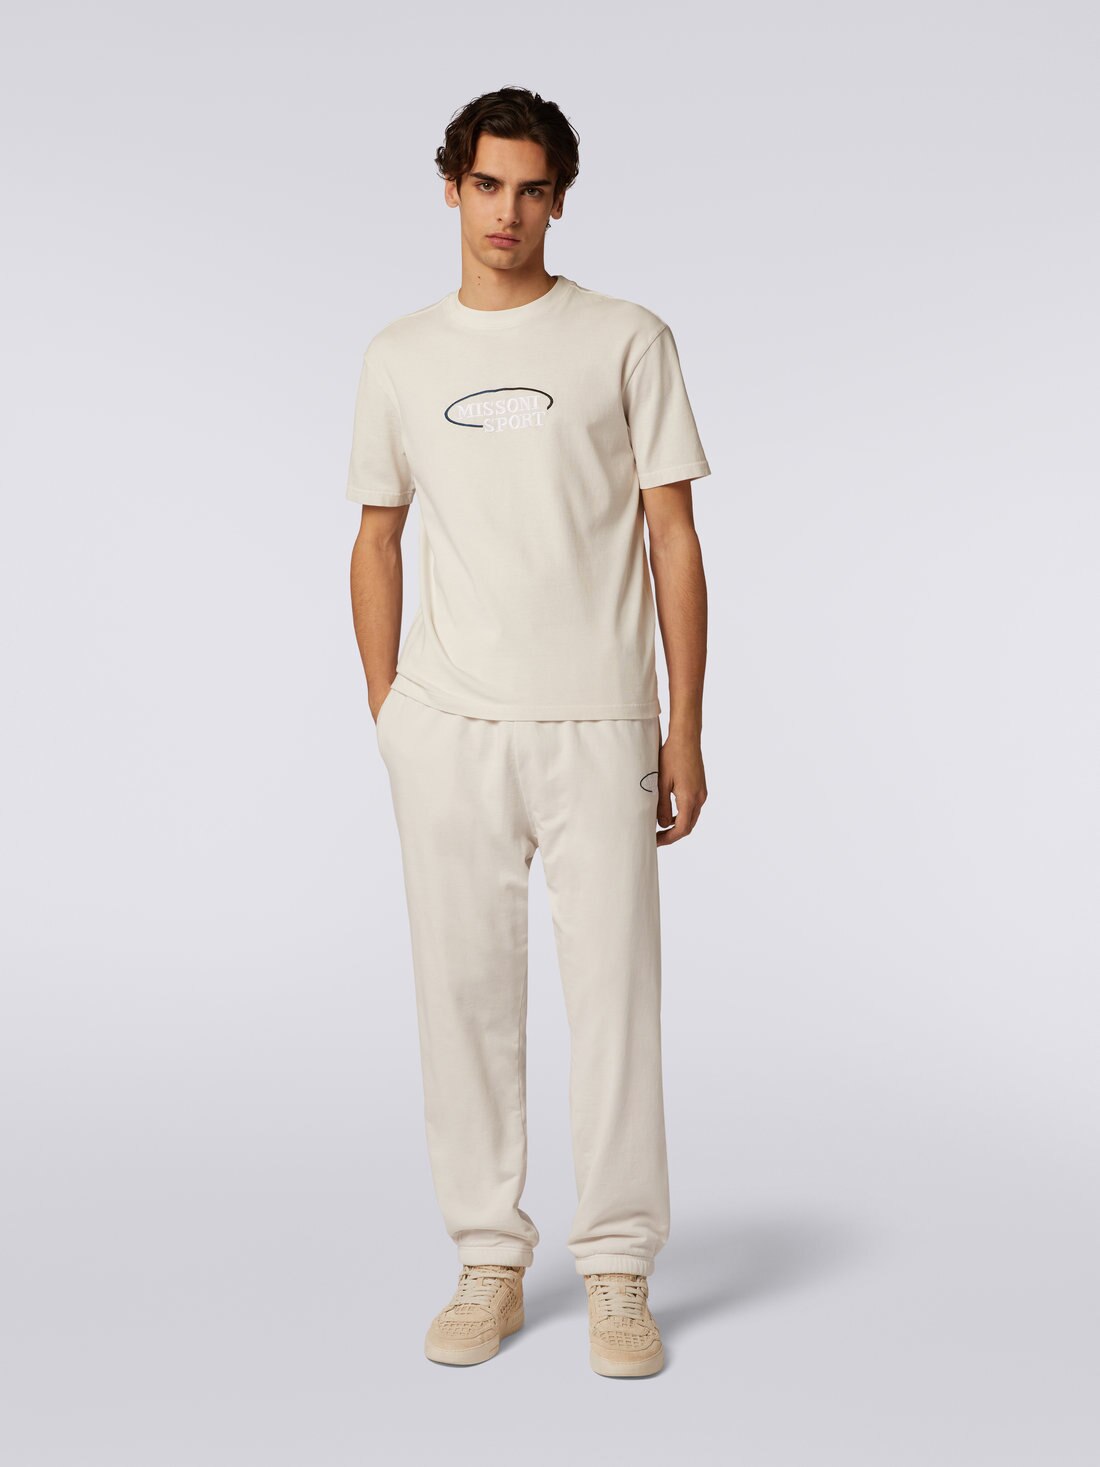 Cotton knit crew-neck T-shirt with logo, White  - TS23WL00BJ00GYS0195 - 1